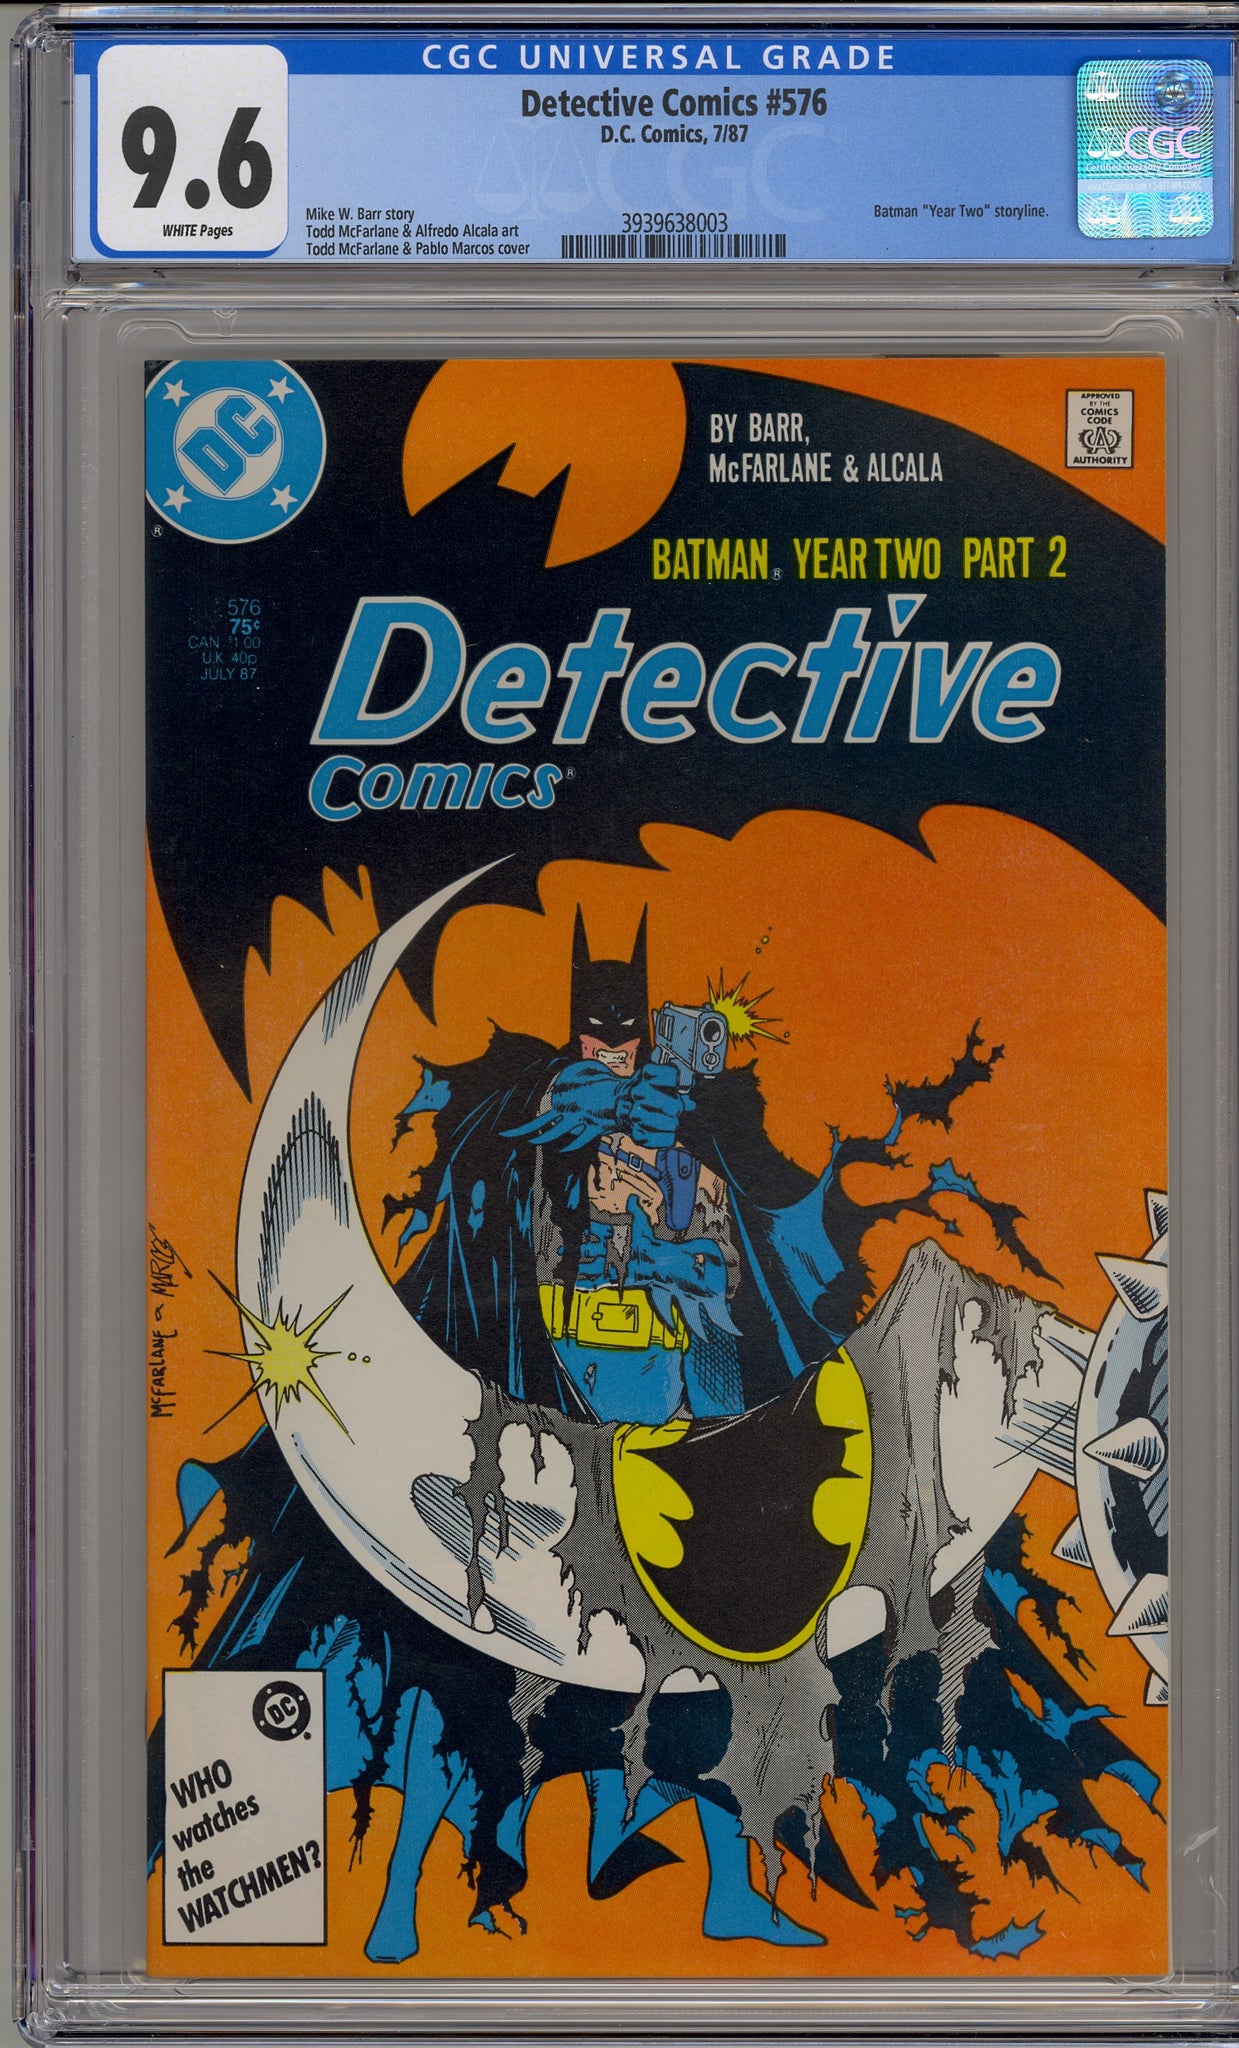 Detective Comics #576 (1987) Year Two Part 2 - Batman